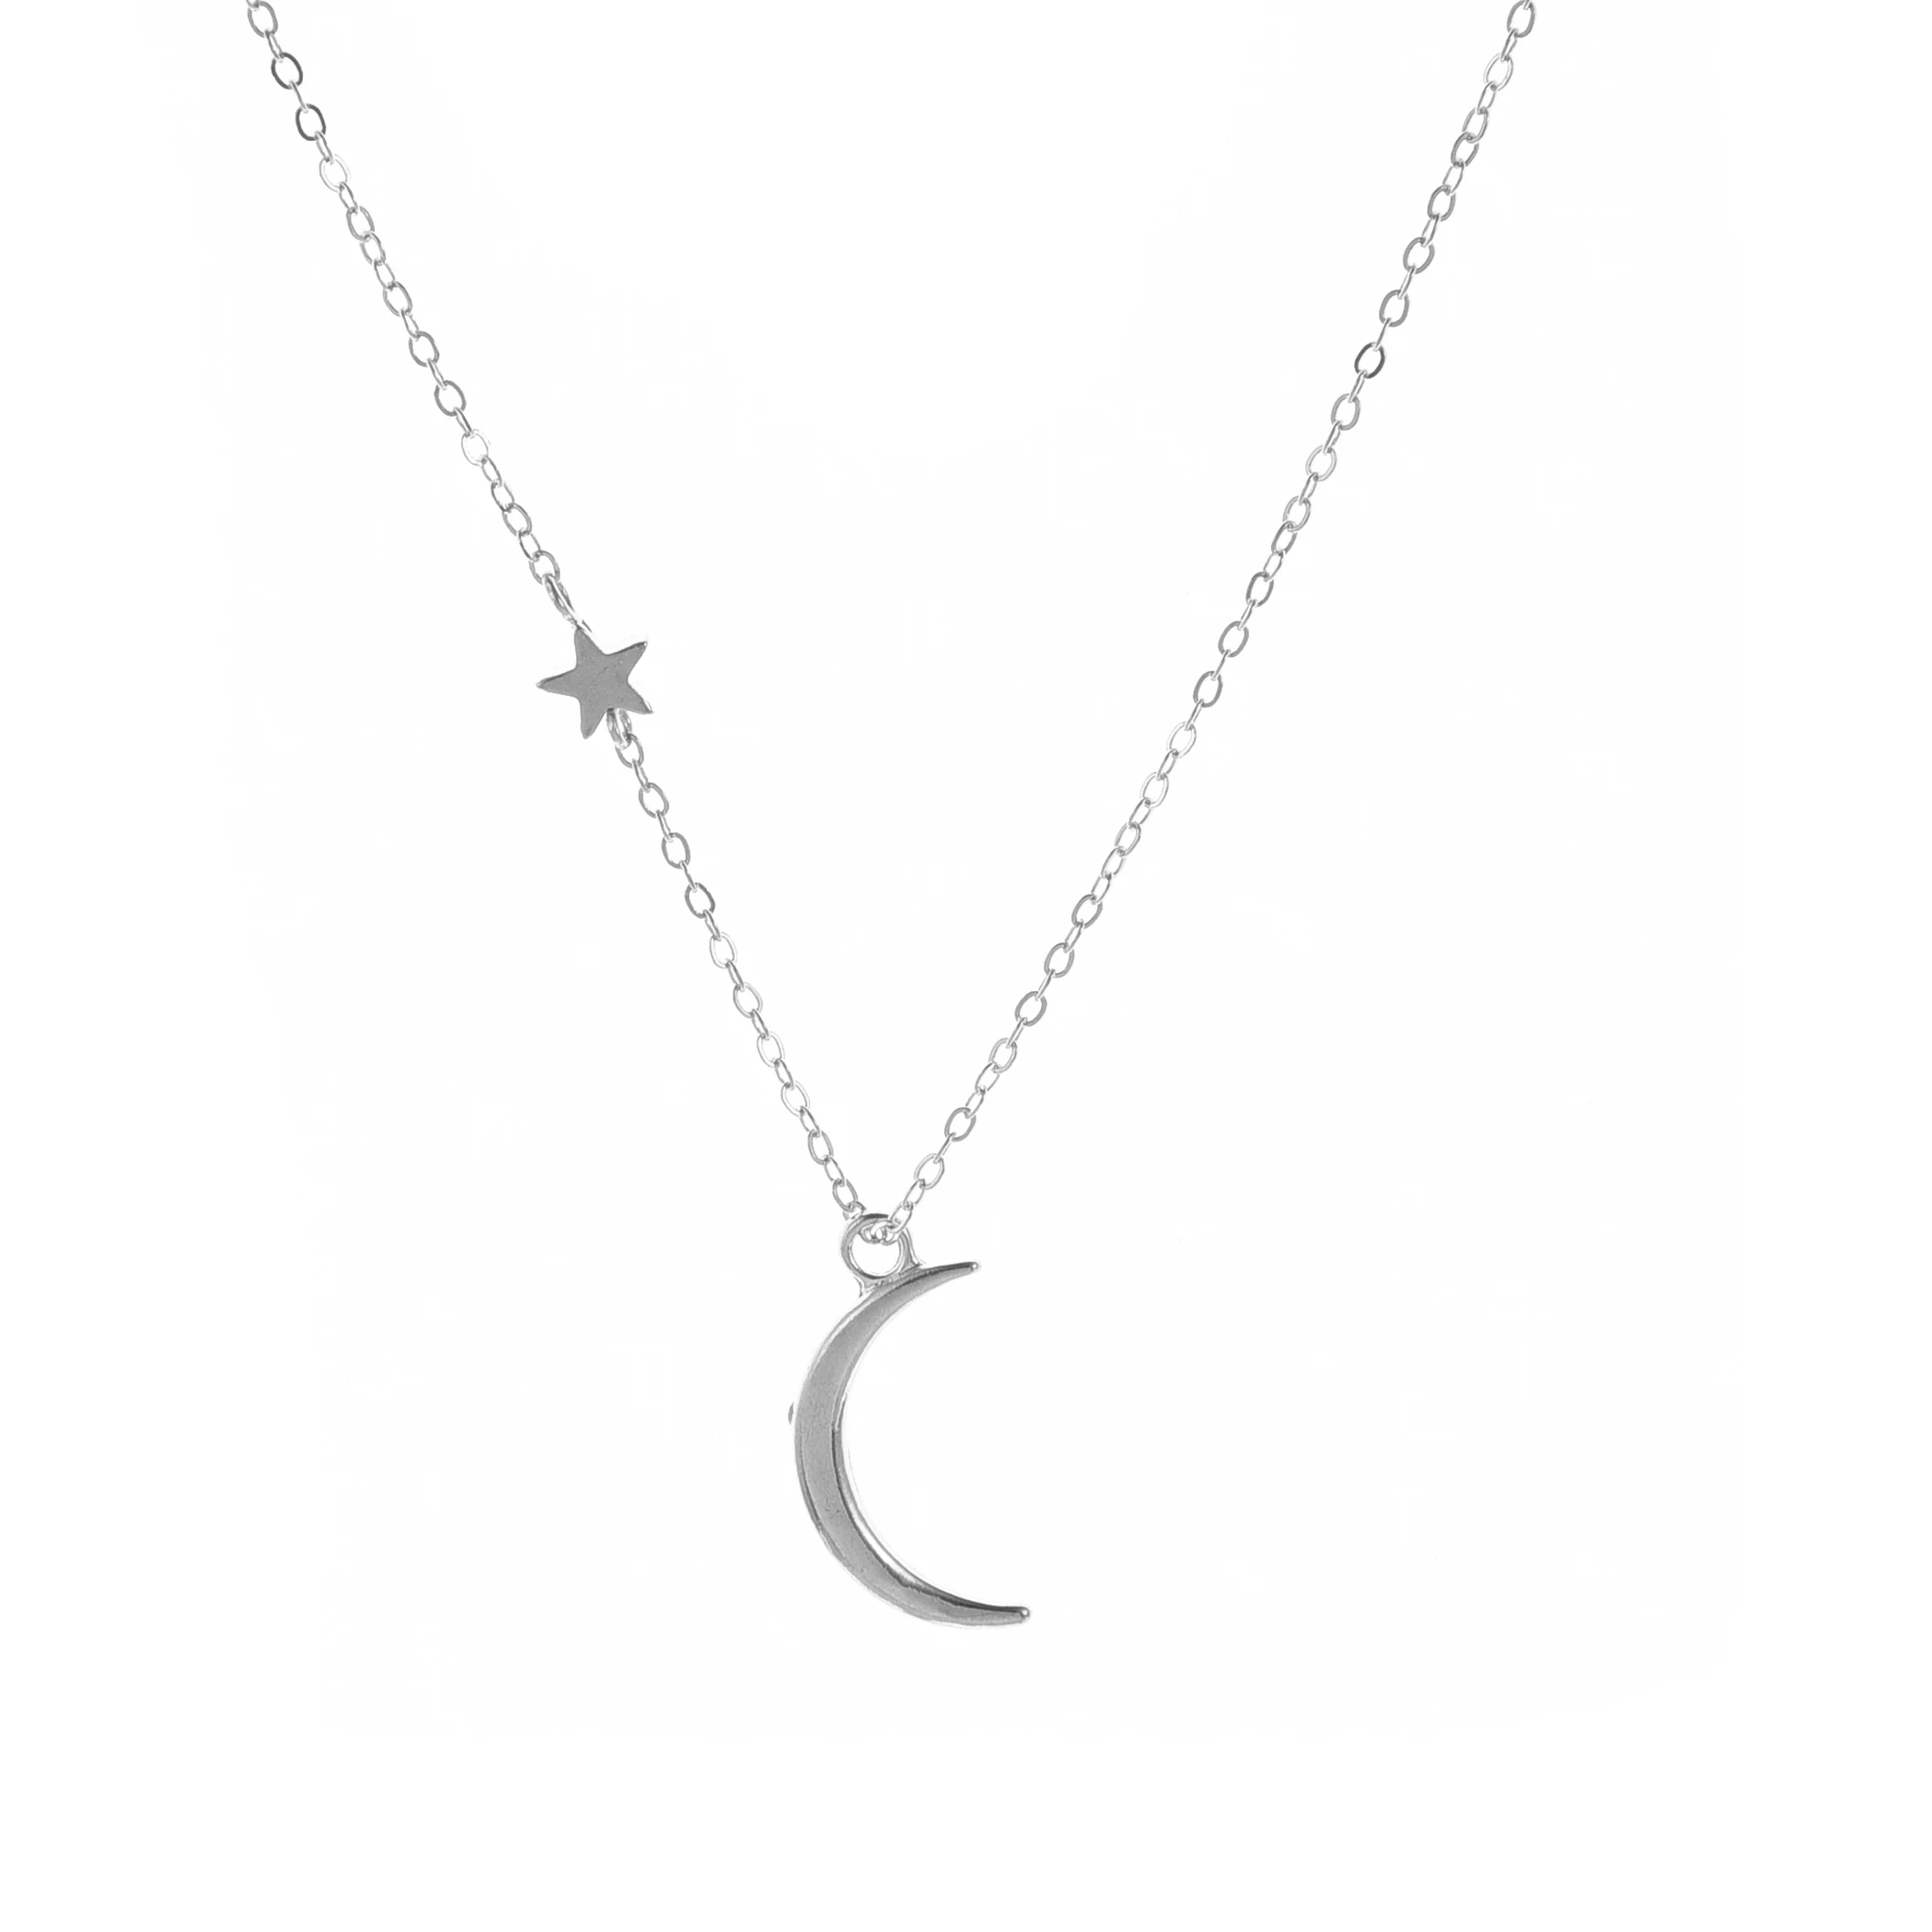 Women's Fashion Gold Chain Black White Half Moon Pendant Necklace UK Seller